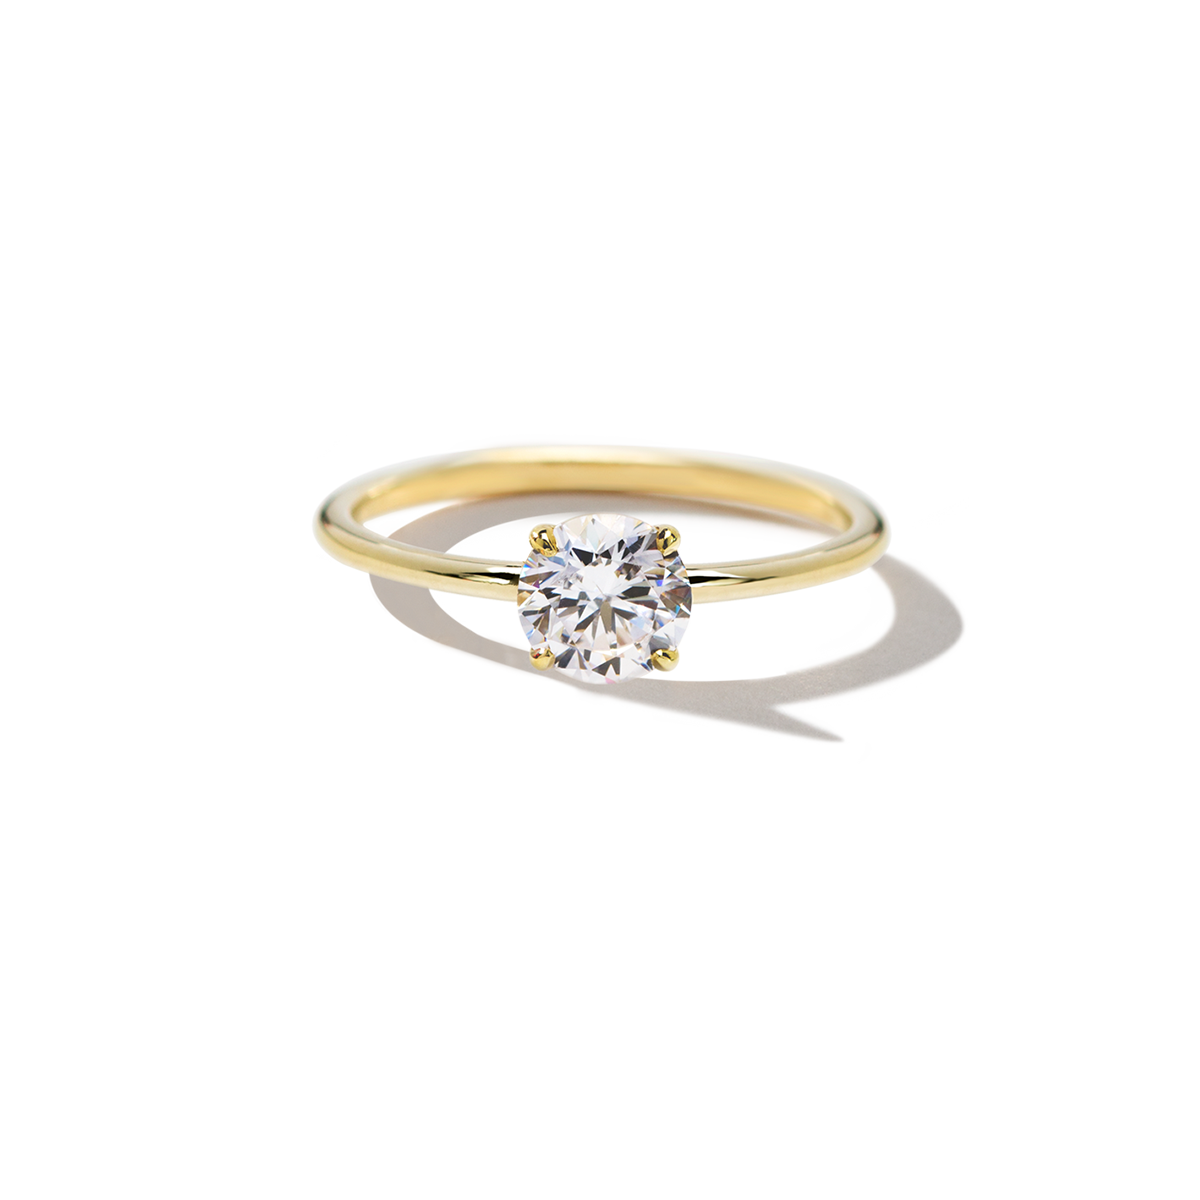 East-West Princess Solitaire Ring | BASHERT JEWELRY - Bashert Jewelry